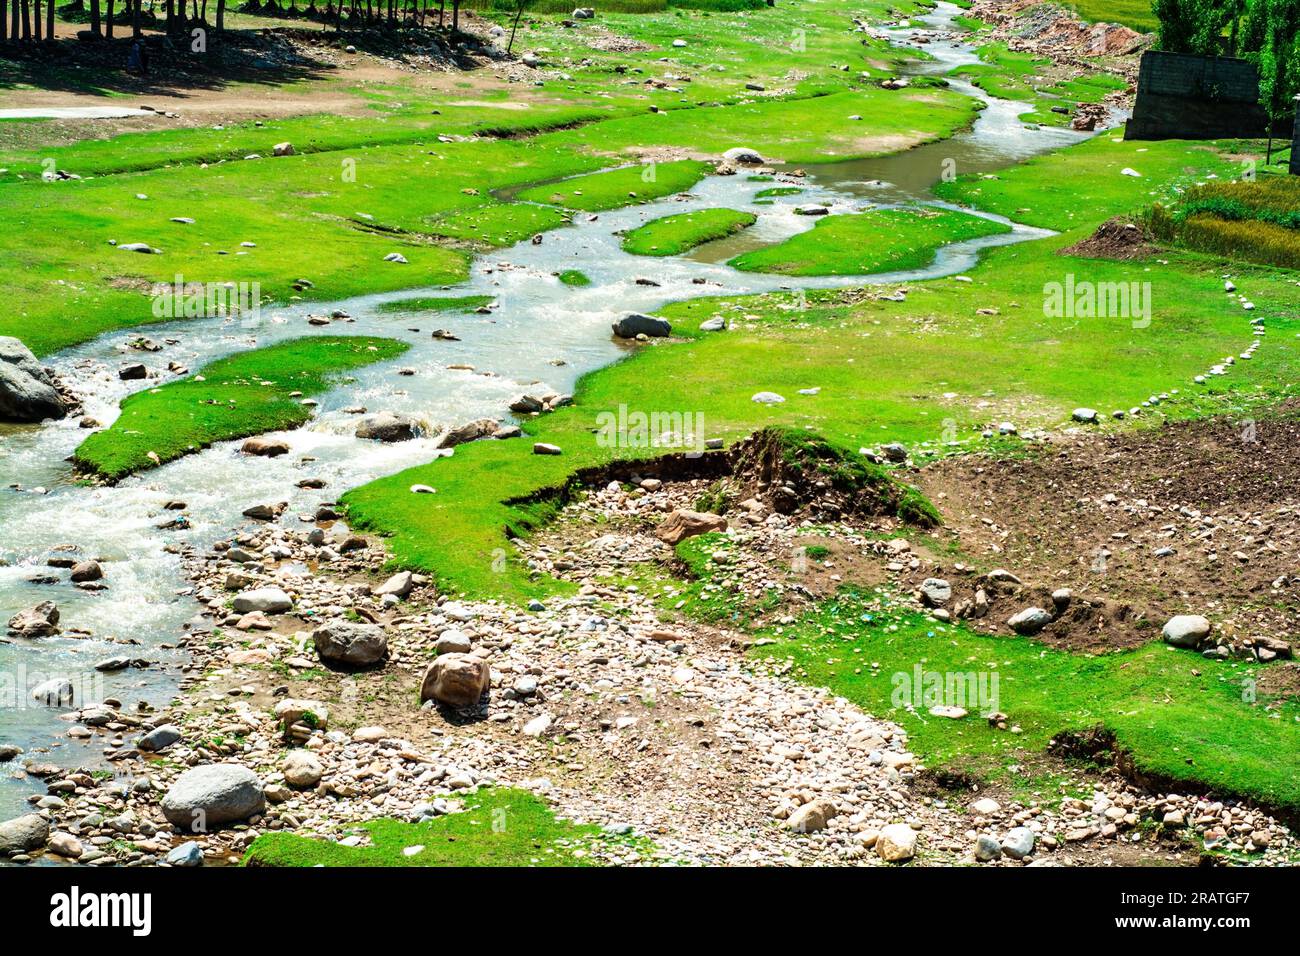 Lush green landscape and stream in the Hindu kush mountains range Stock Photo